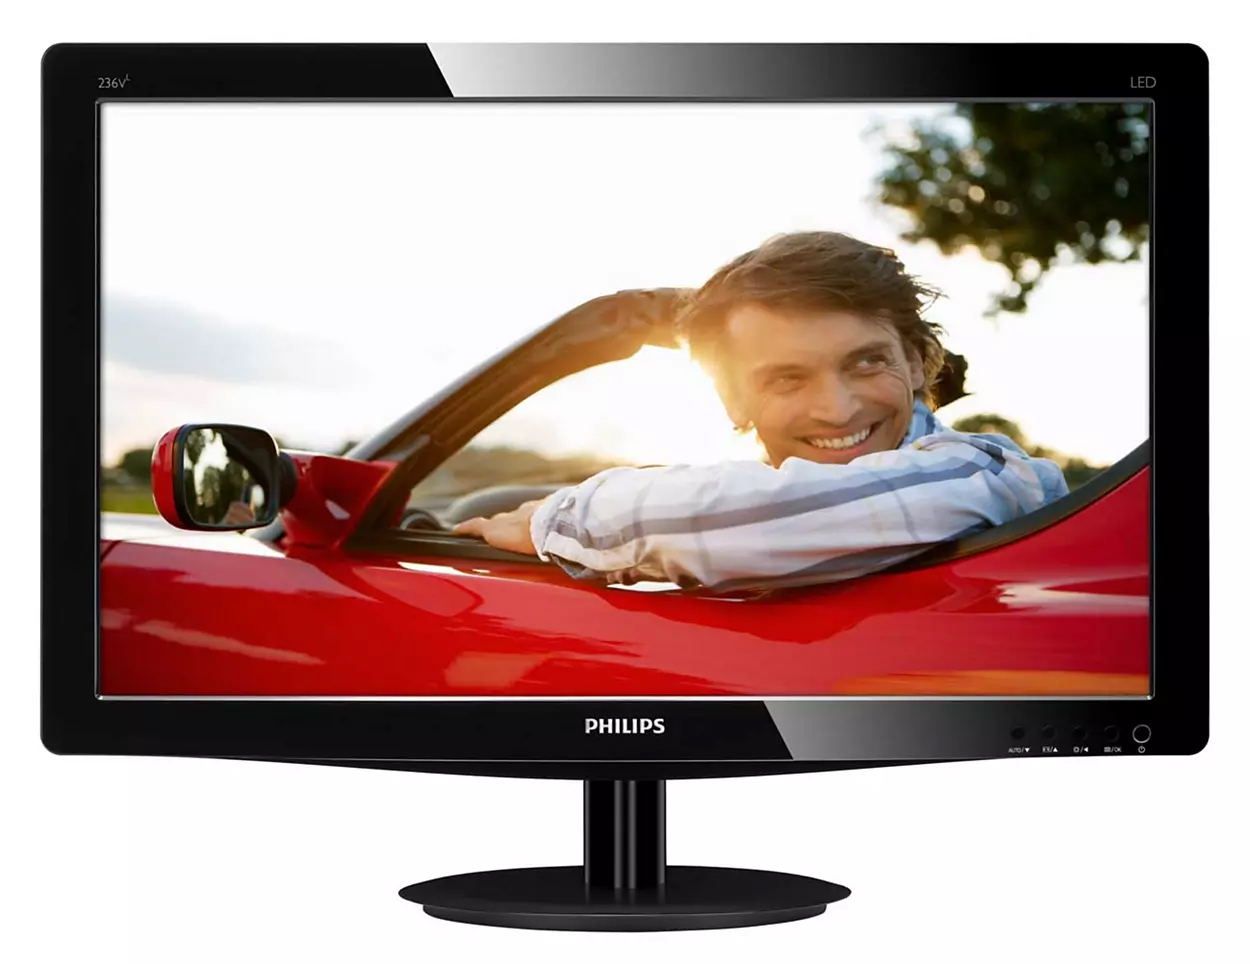 Monitor Philips 236V3L, 23 Inch Full HD LED, VGA, DVI